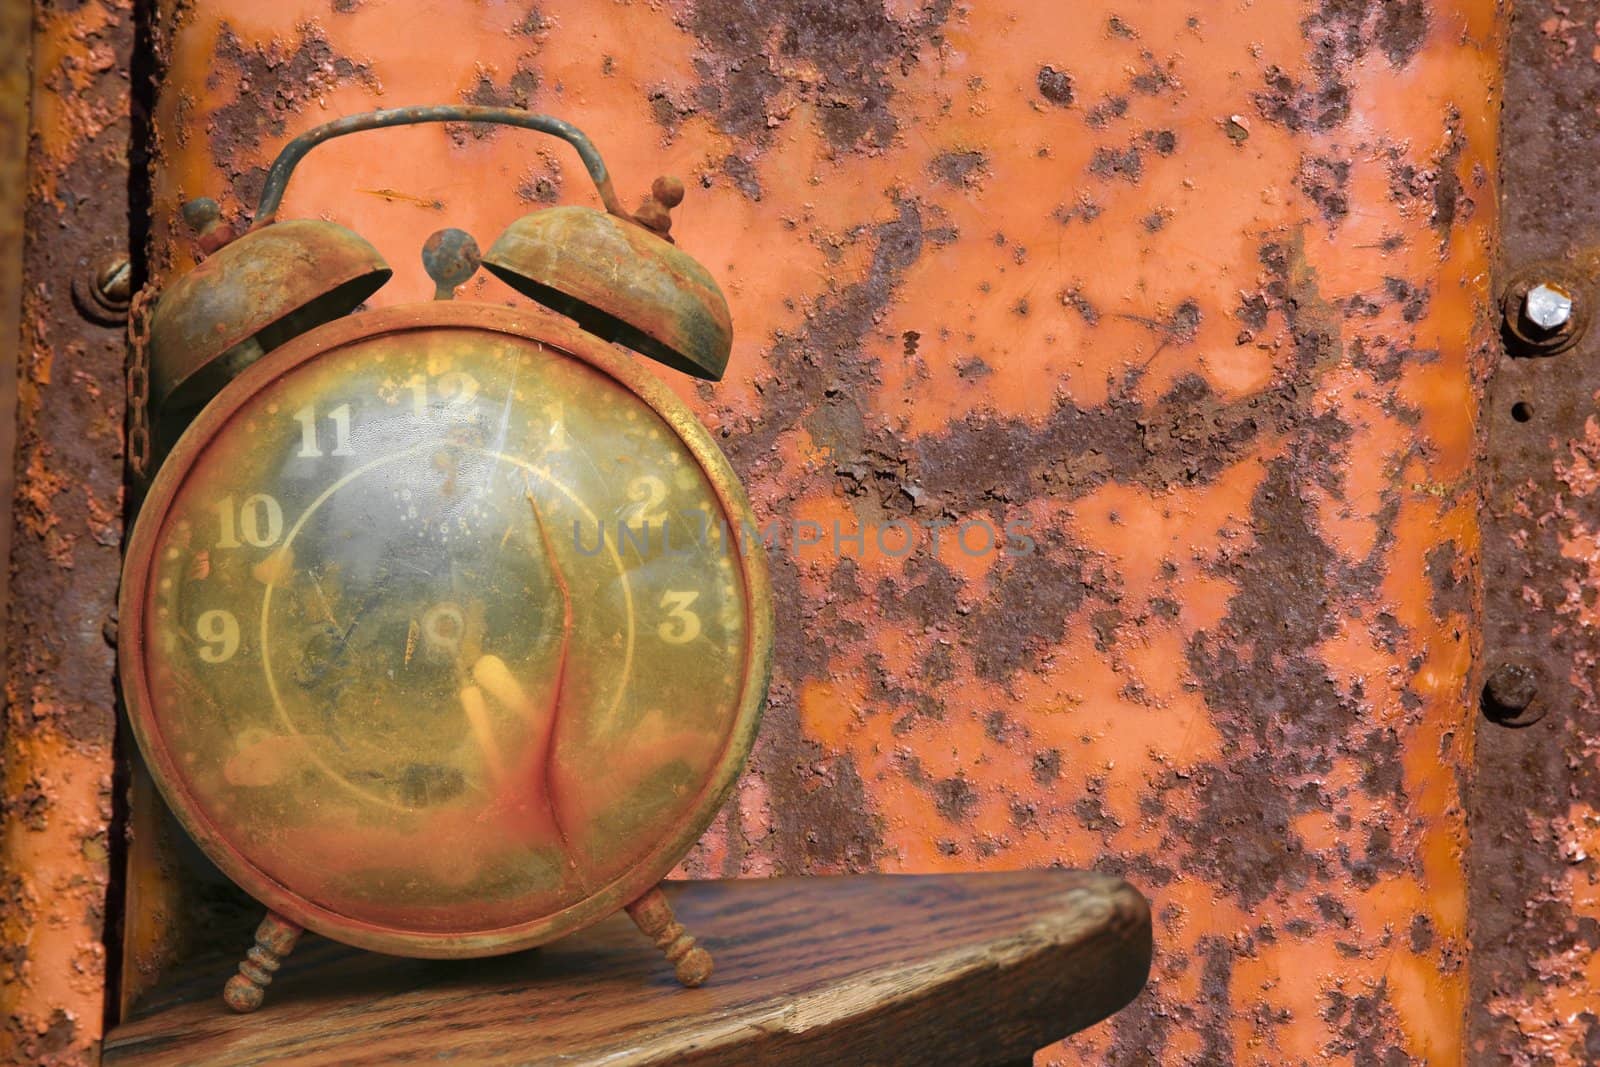 Old weathered alarm clock against rusty orange metal background.